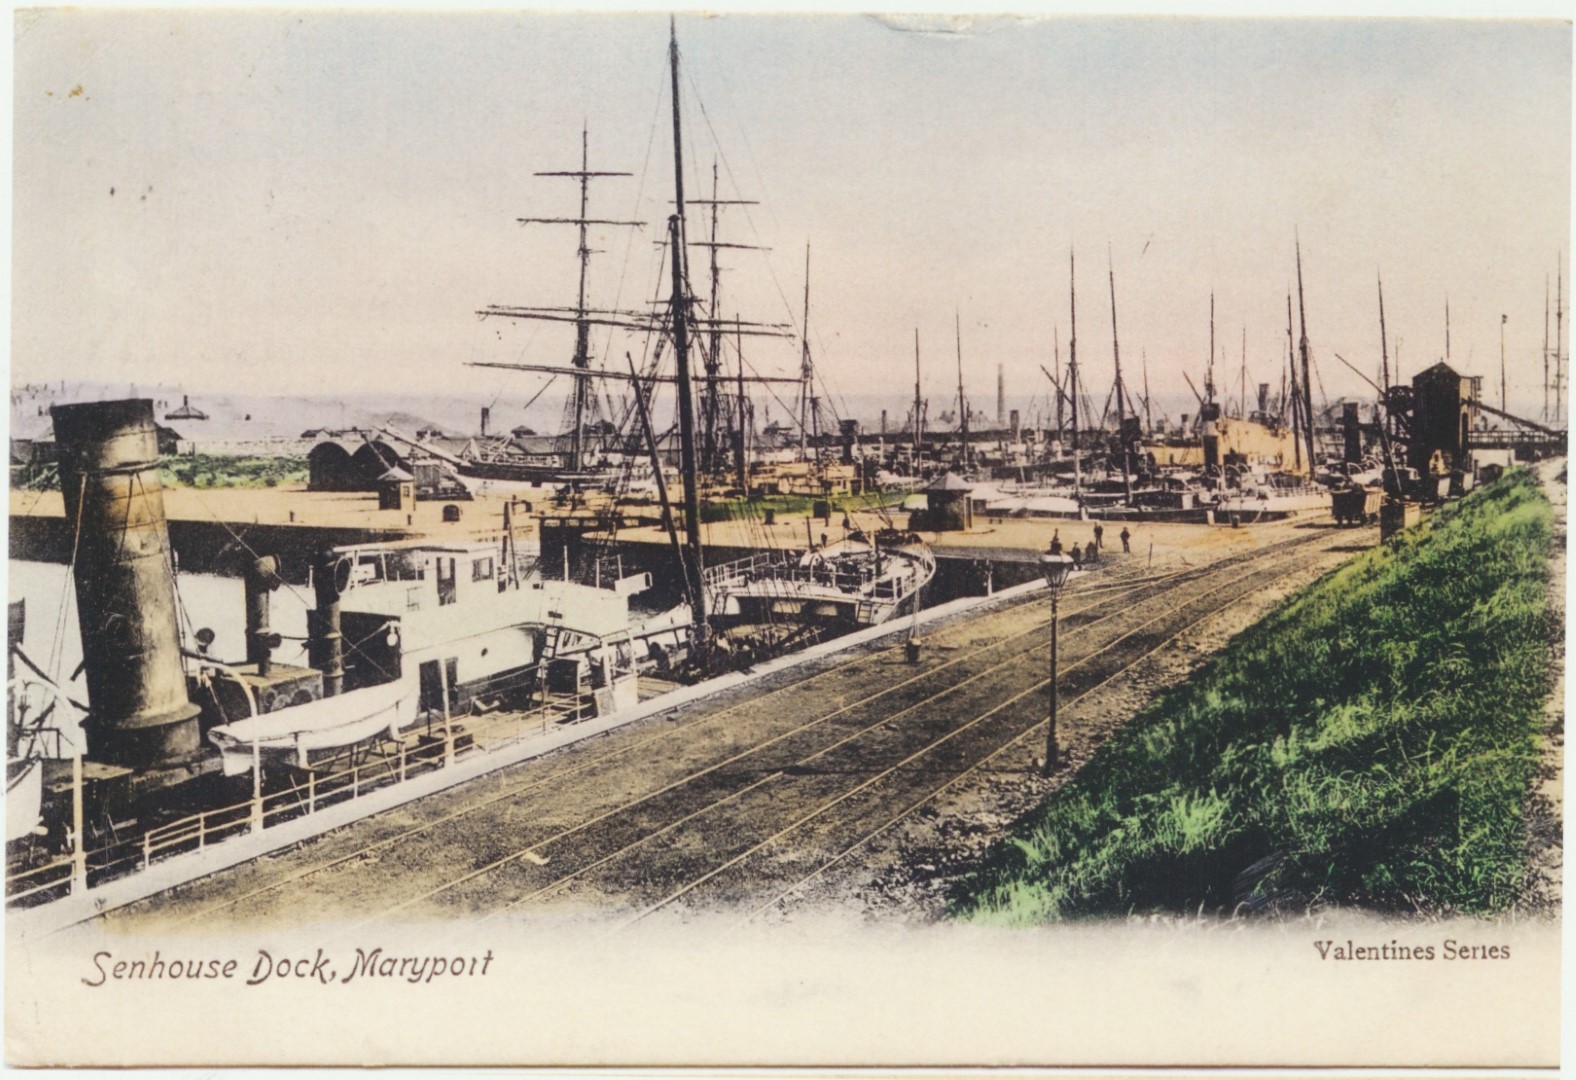 Maryport Senhouse Dock multiple sailing and steam ships coal loading and rails colourised jpg